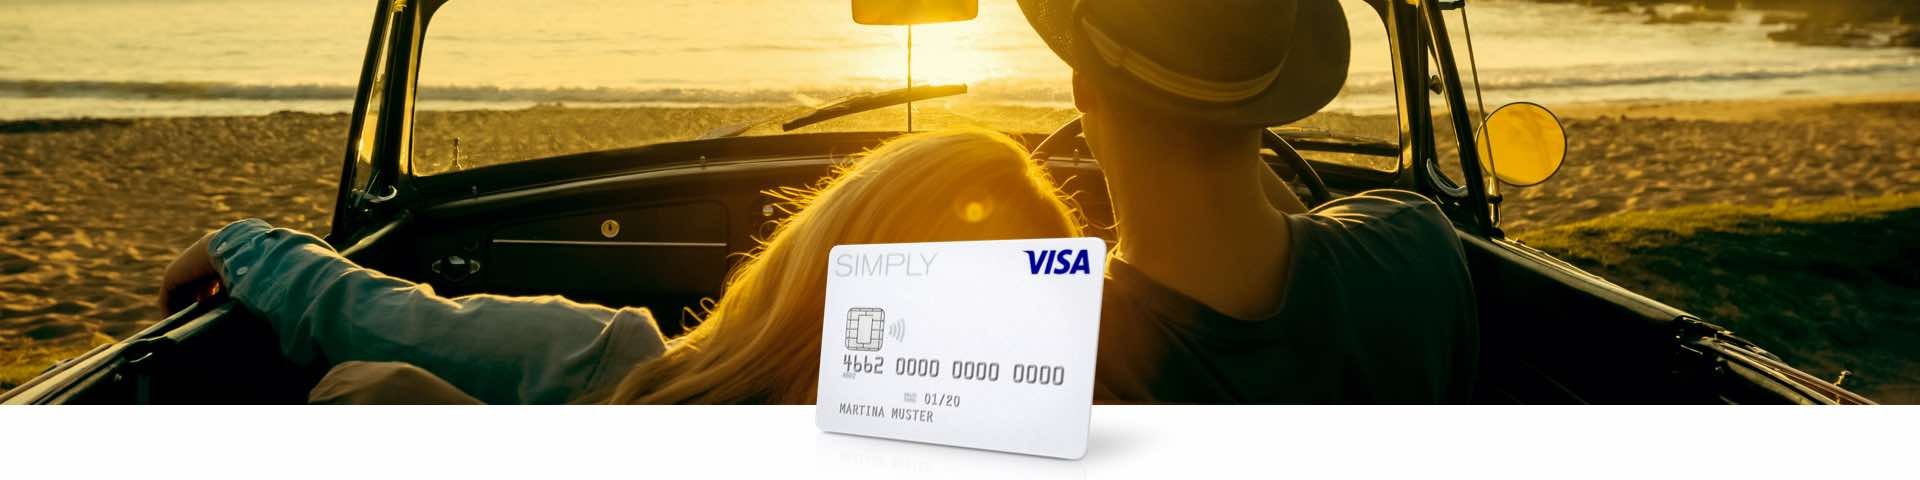 SIMPLYCARD | Visa Card - Prepaidkarte